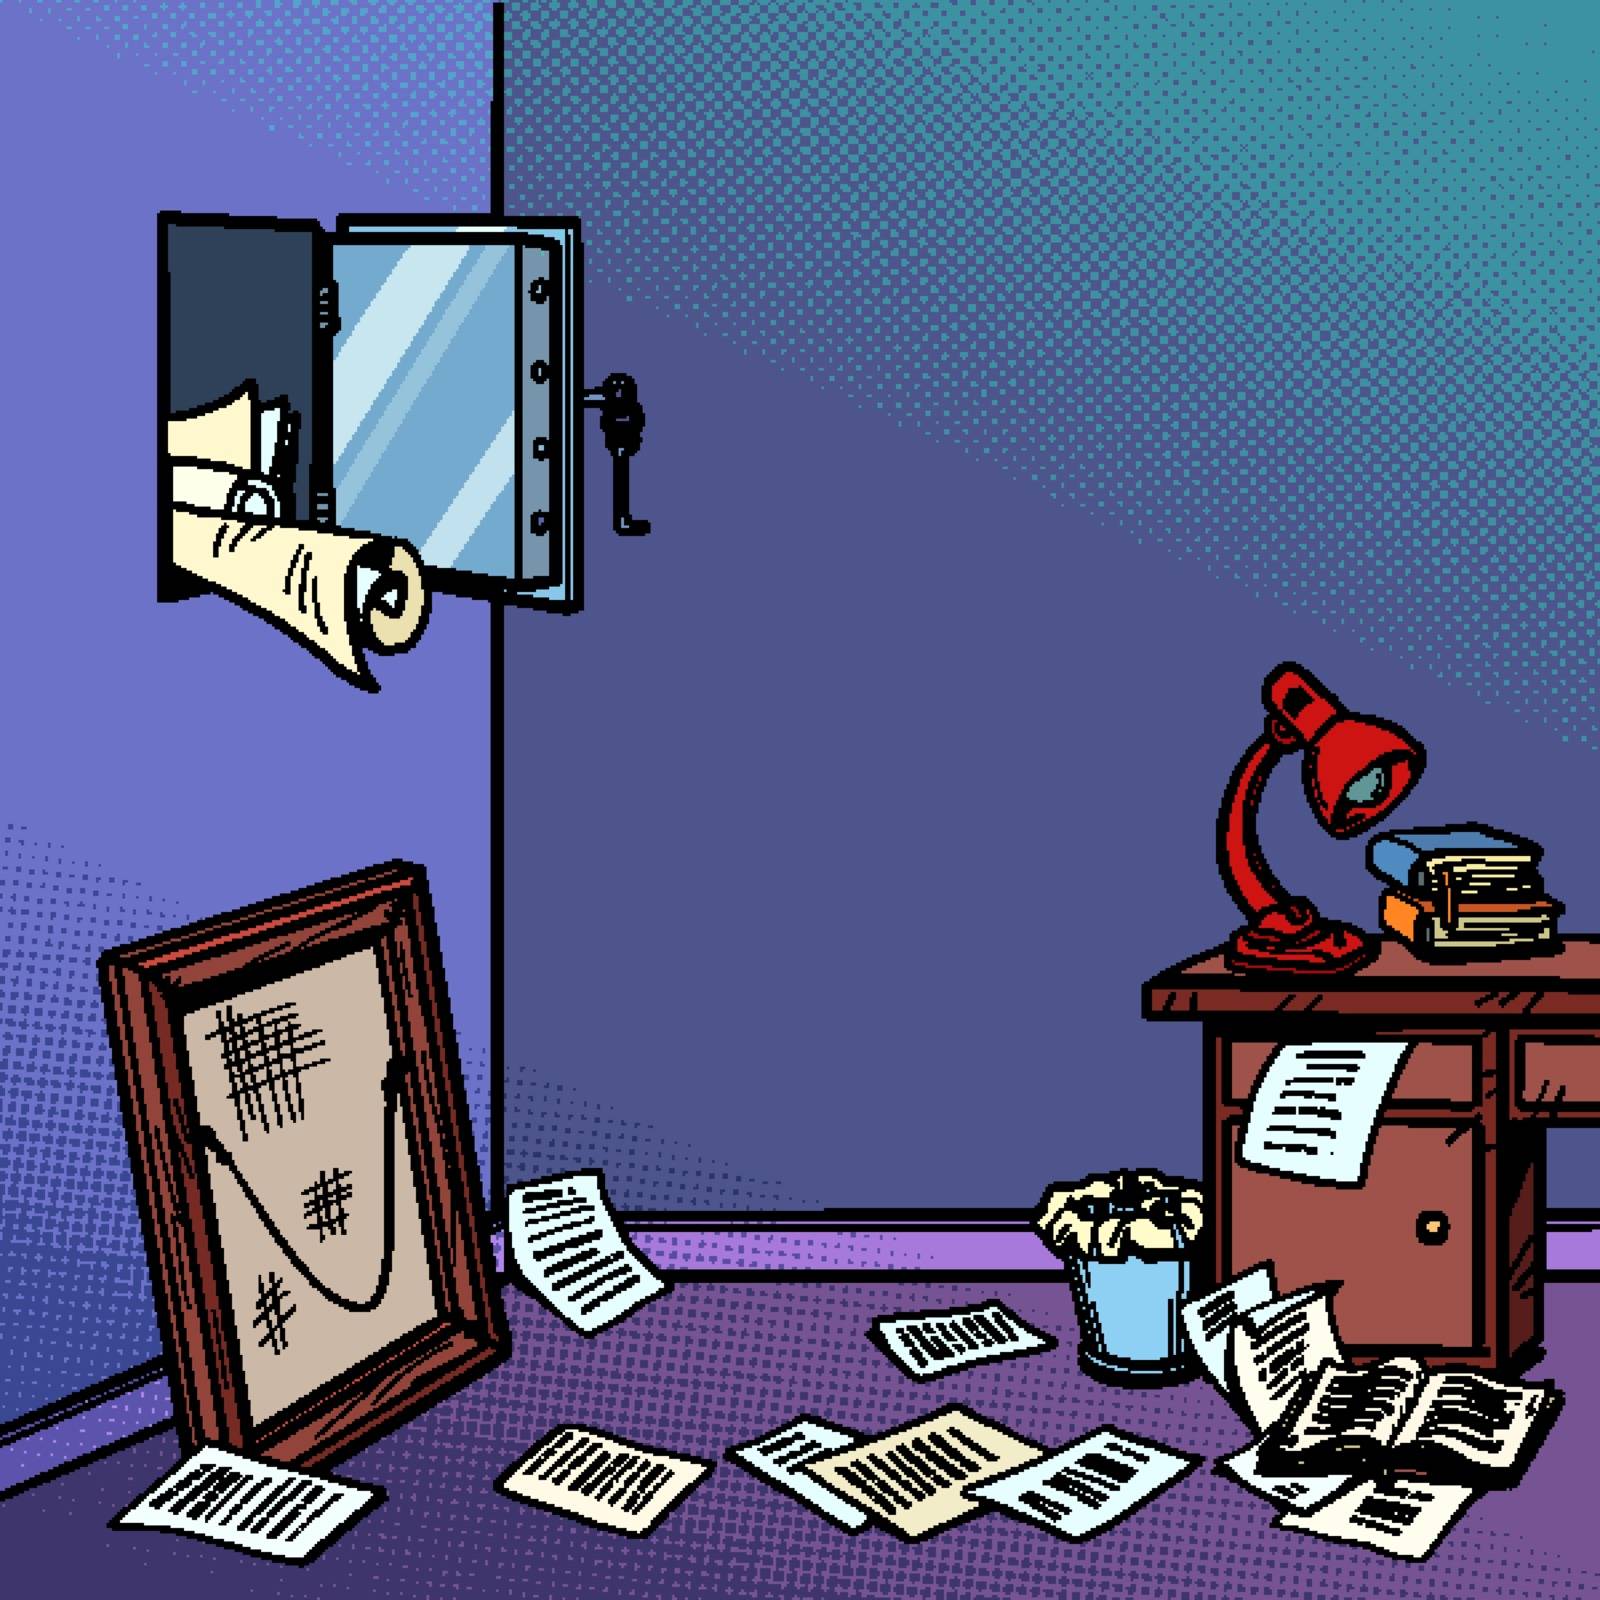 hacking home safe securities, robbery. Comic cartoon pop art retro vector illustration drawing